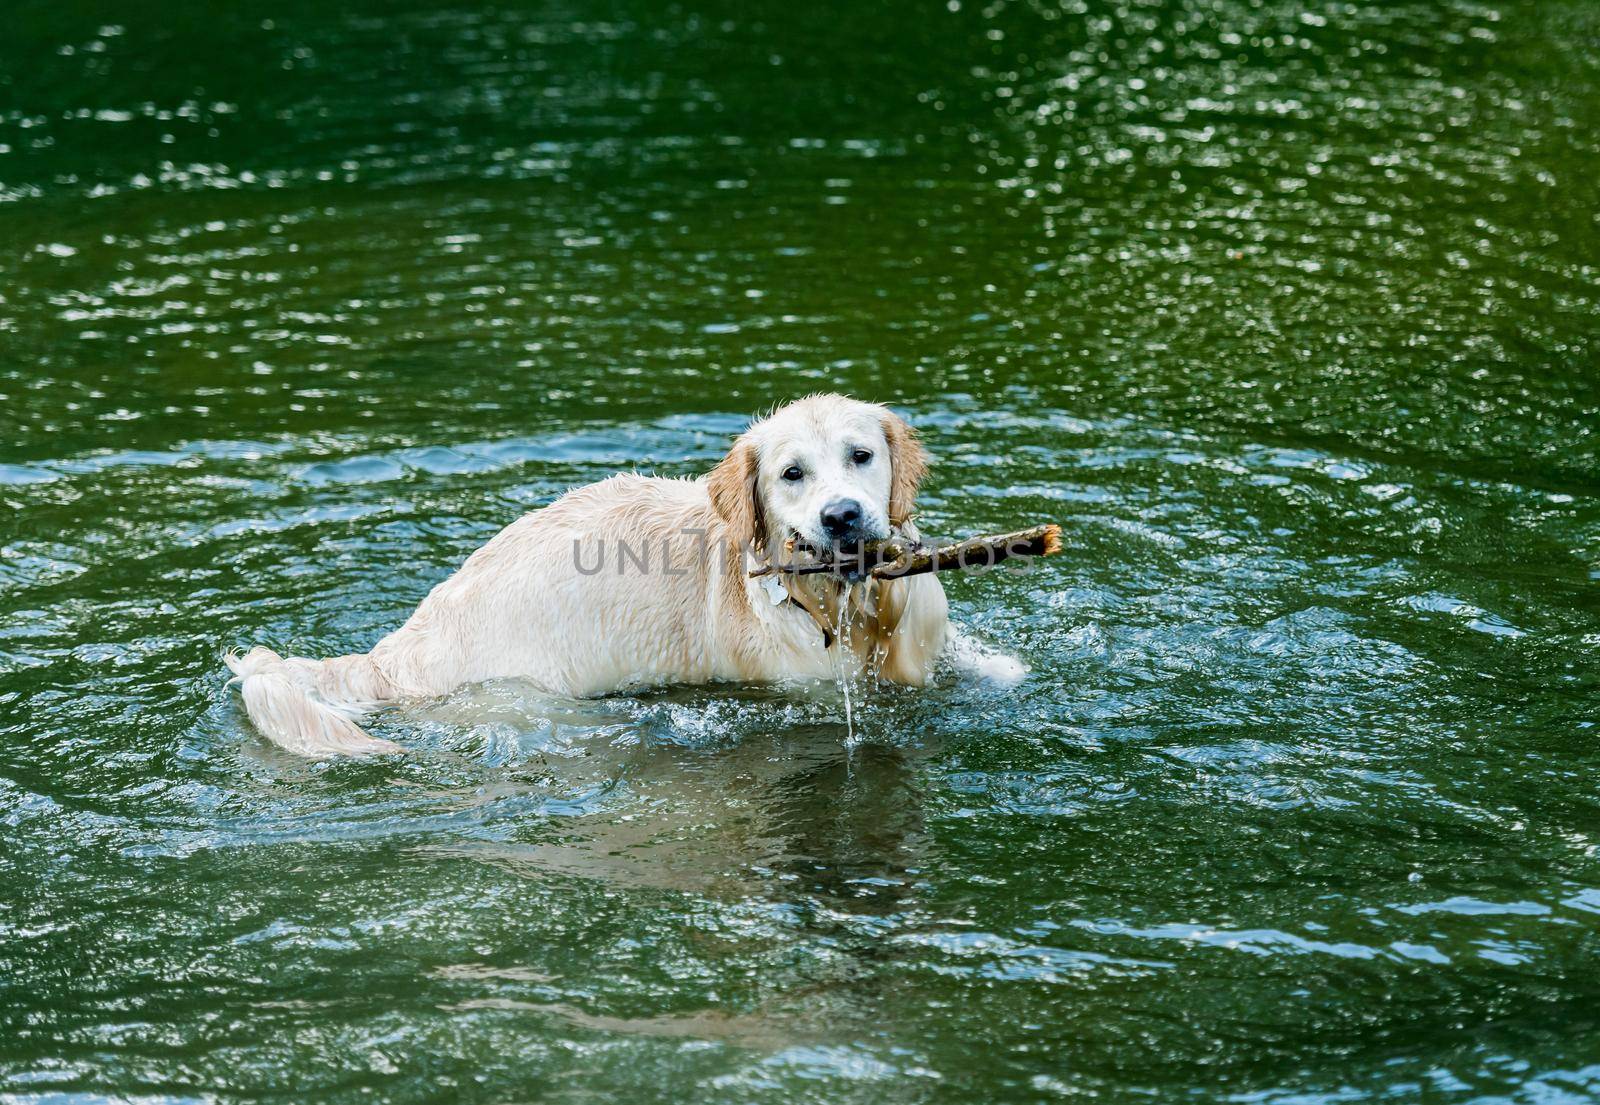 Lovely dog having fun in river by tan4ikk1